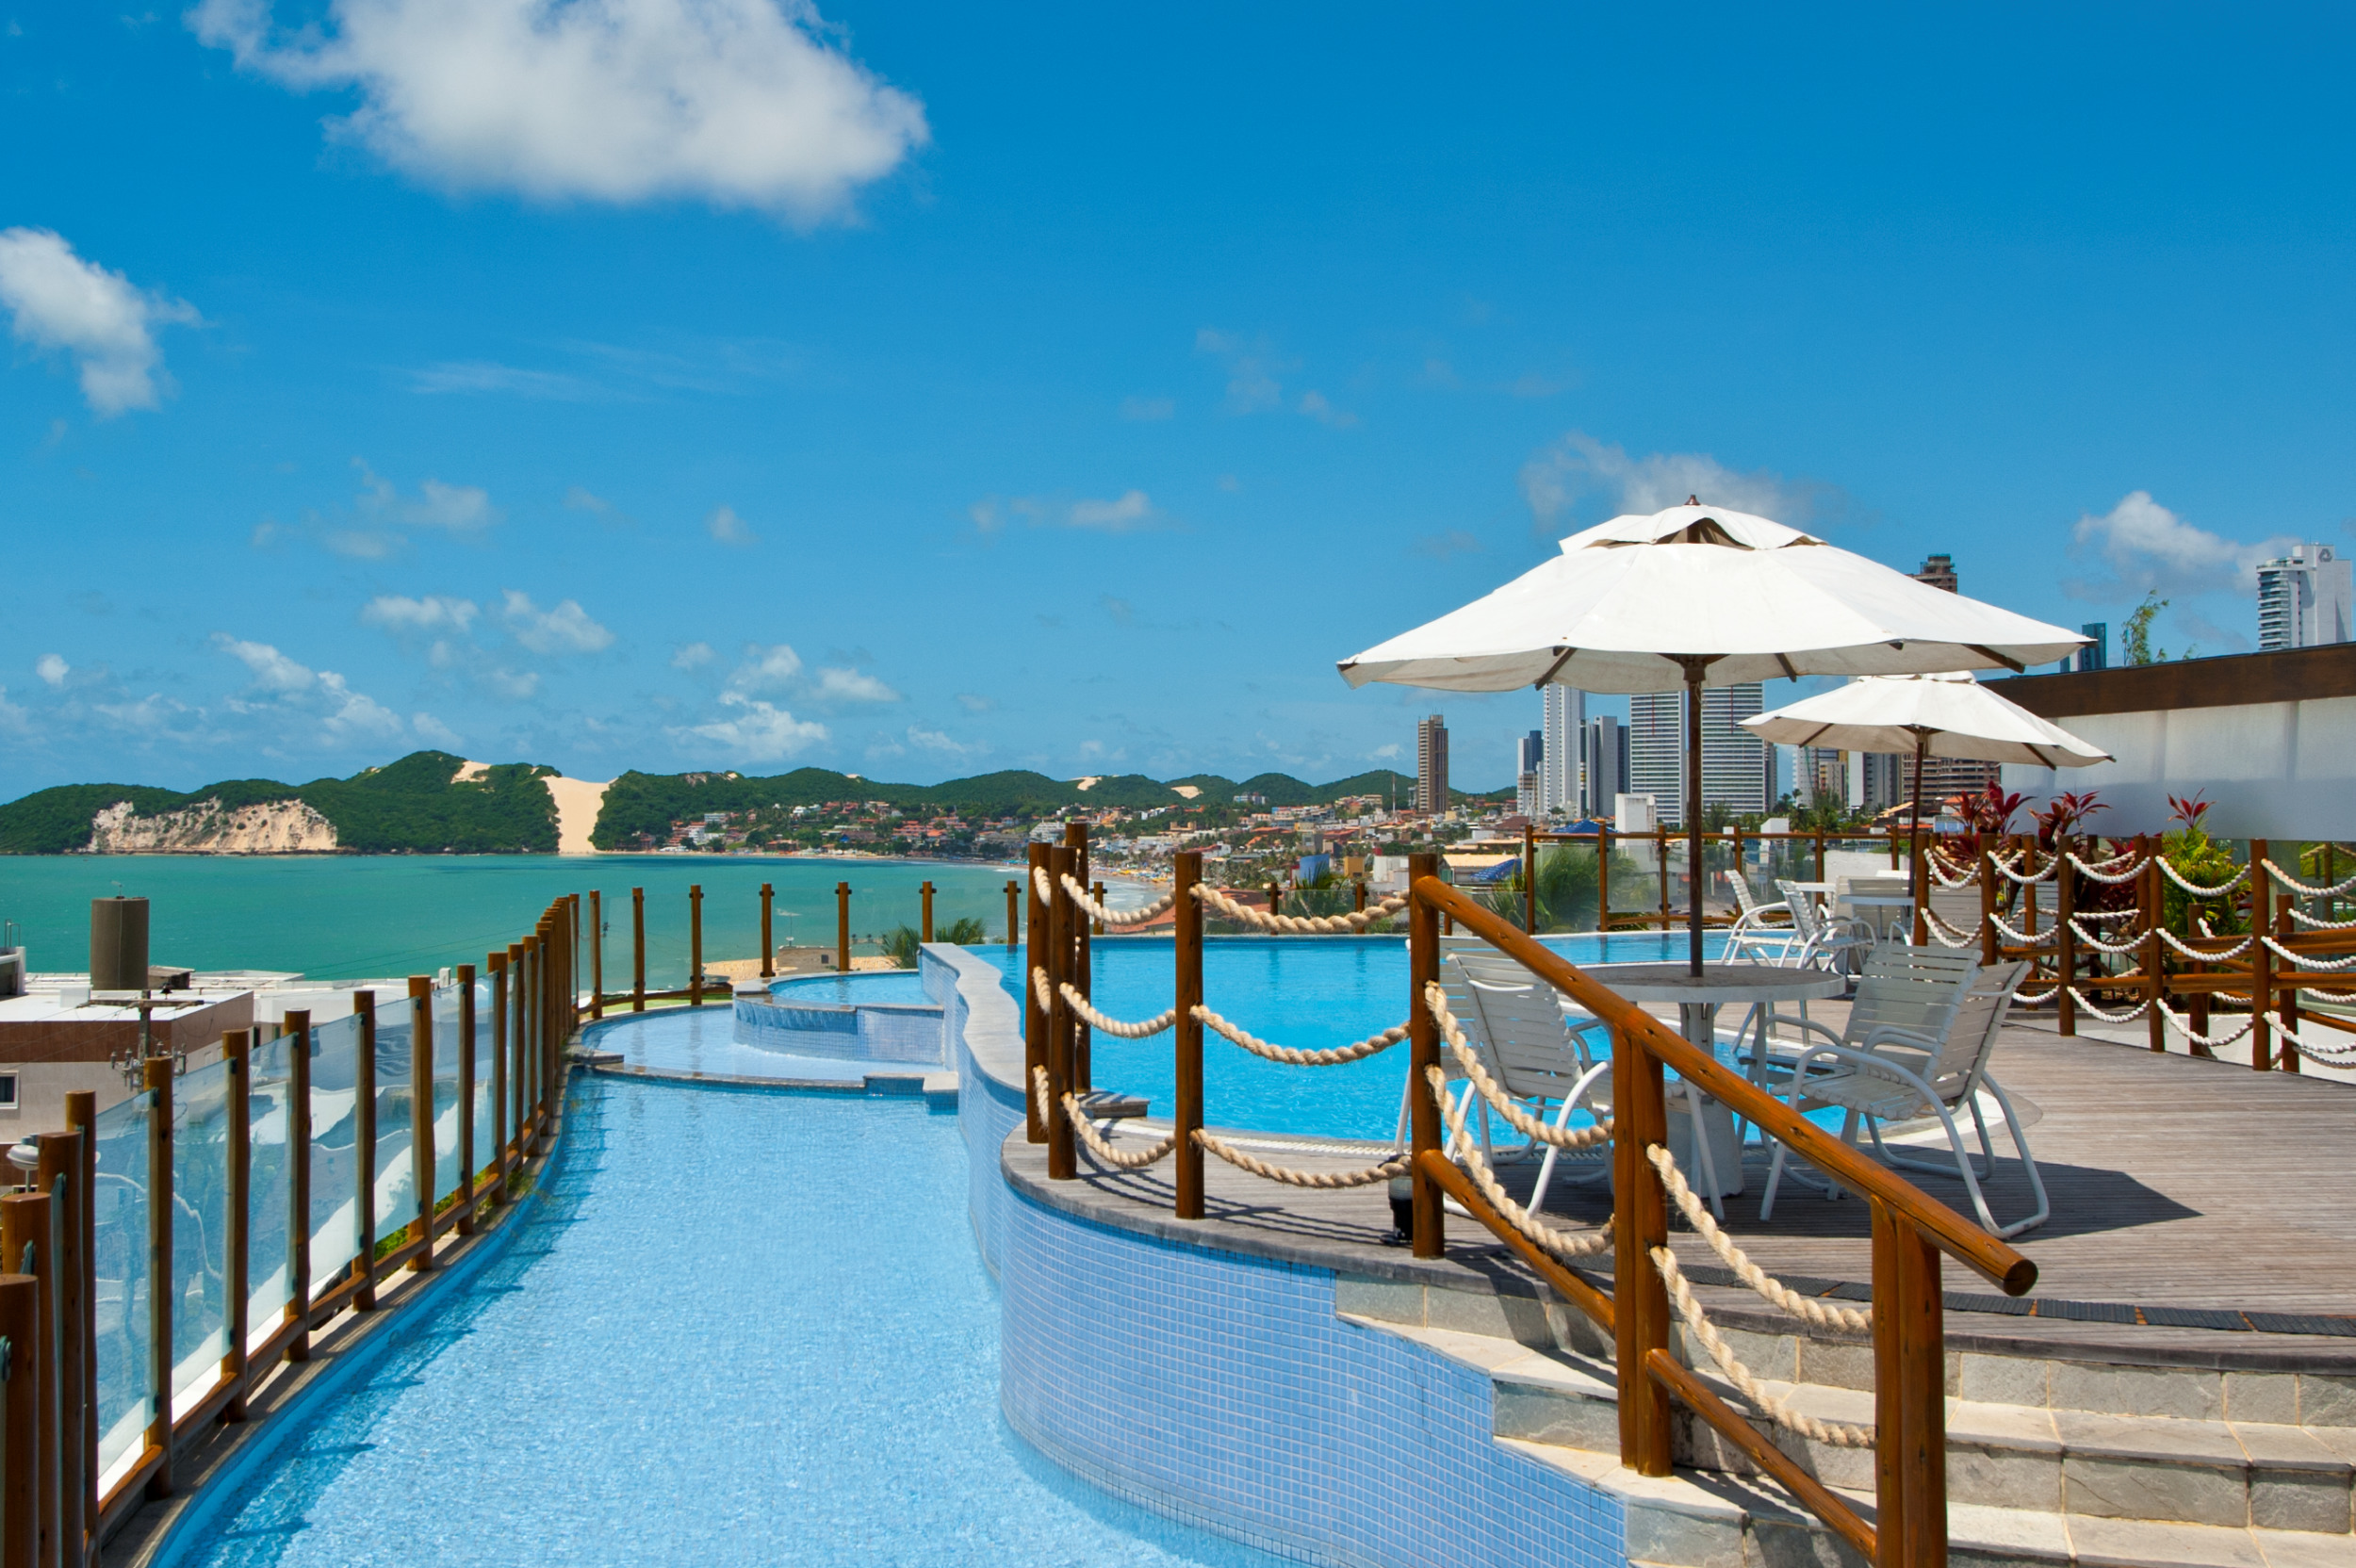 Pontalmar Praia Hotel, Natal Start From USD 64 per night - Price, Address &  Reviews